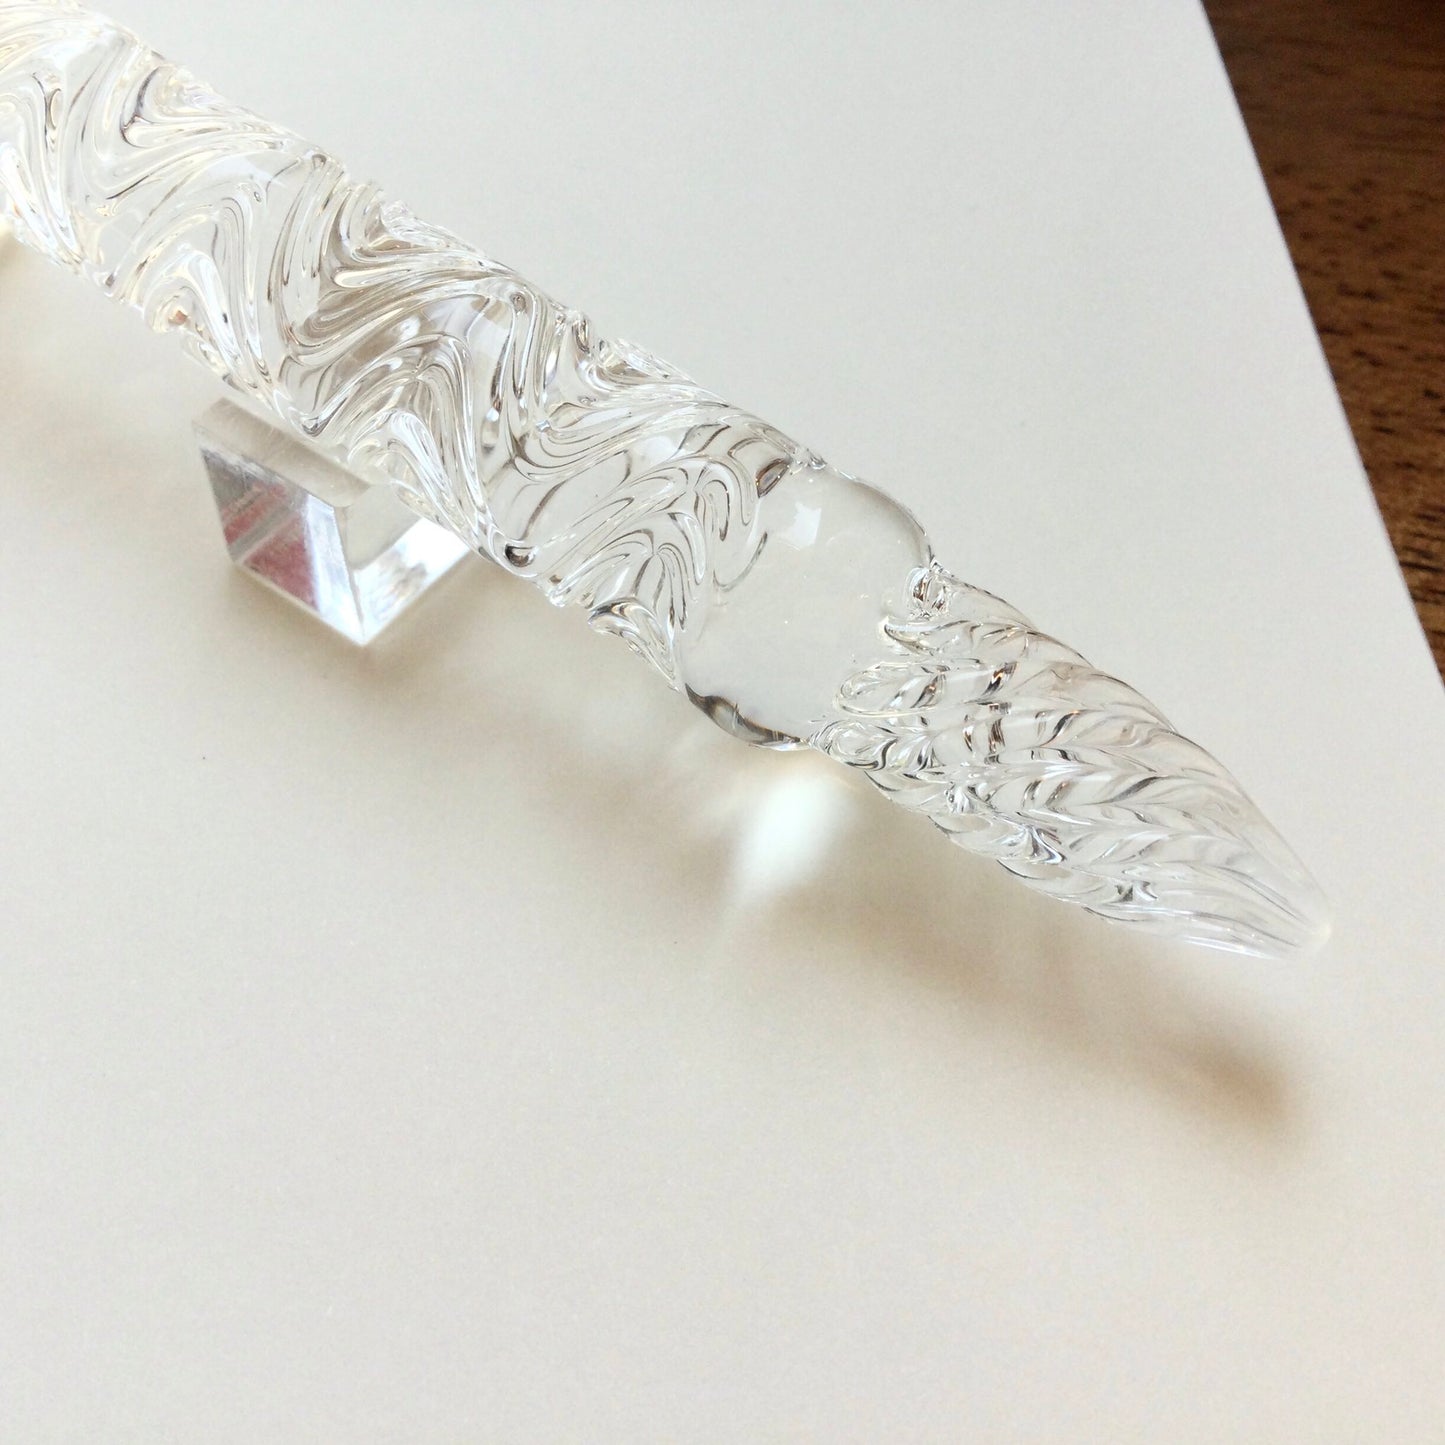 Synchronicity Glass Art ガラスペン "うねり 二刀流" クリア